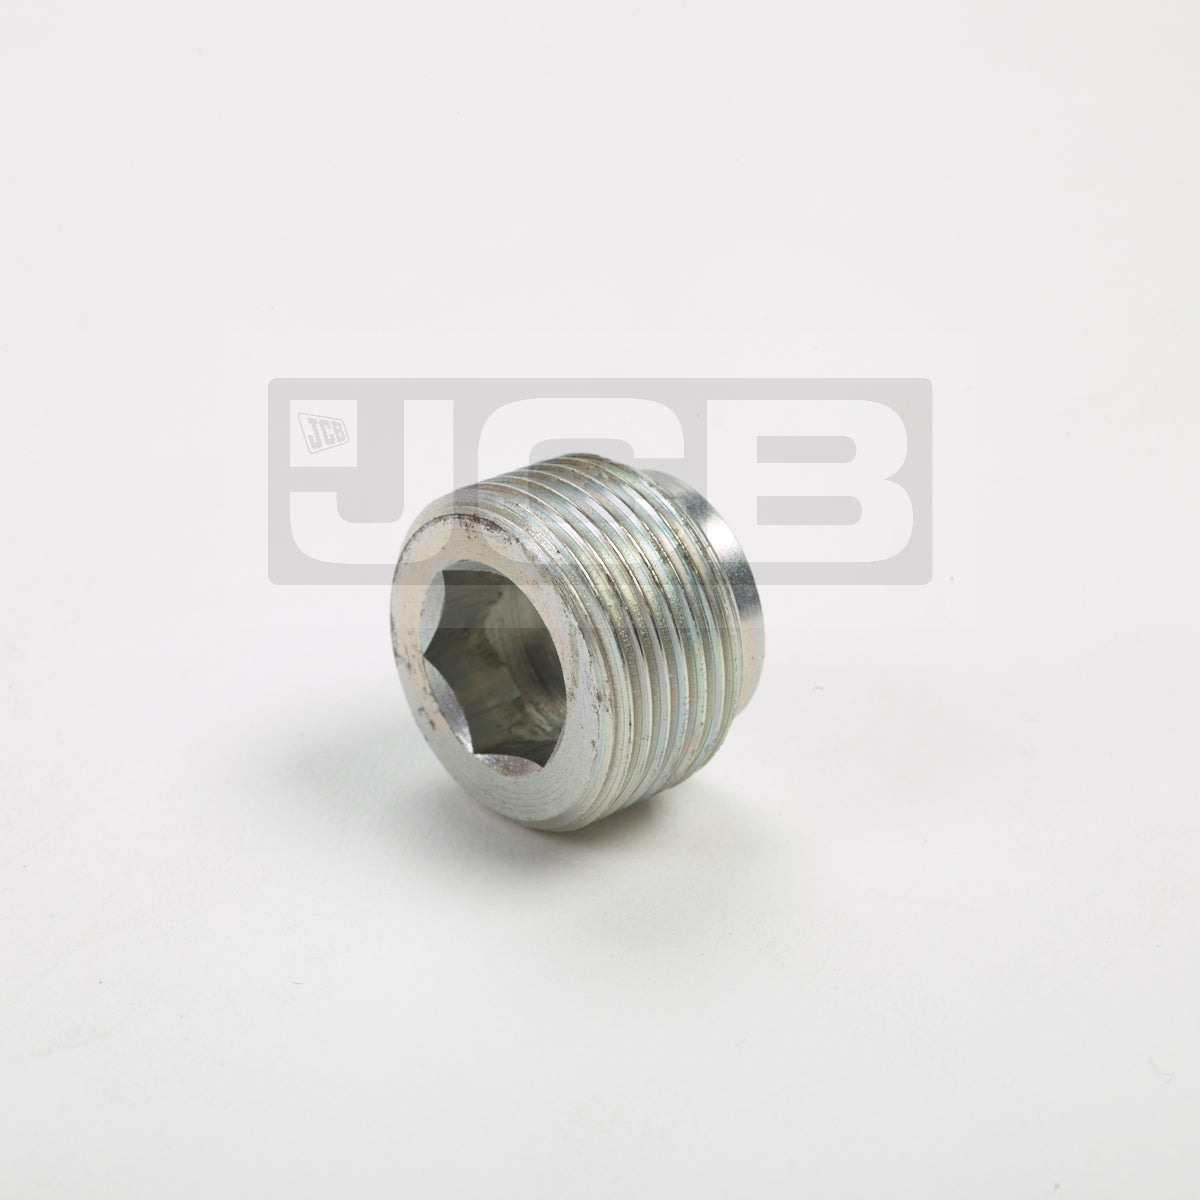 JCB 3/4 inch BSP Magnetic Taper Plug 14mm Drive : 816/M3848